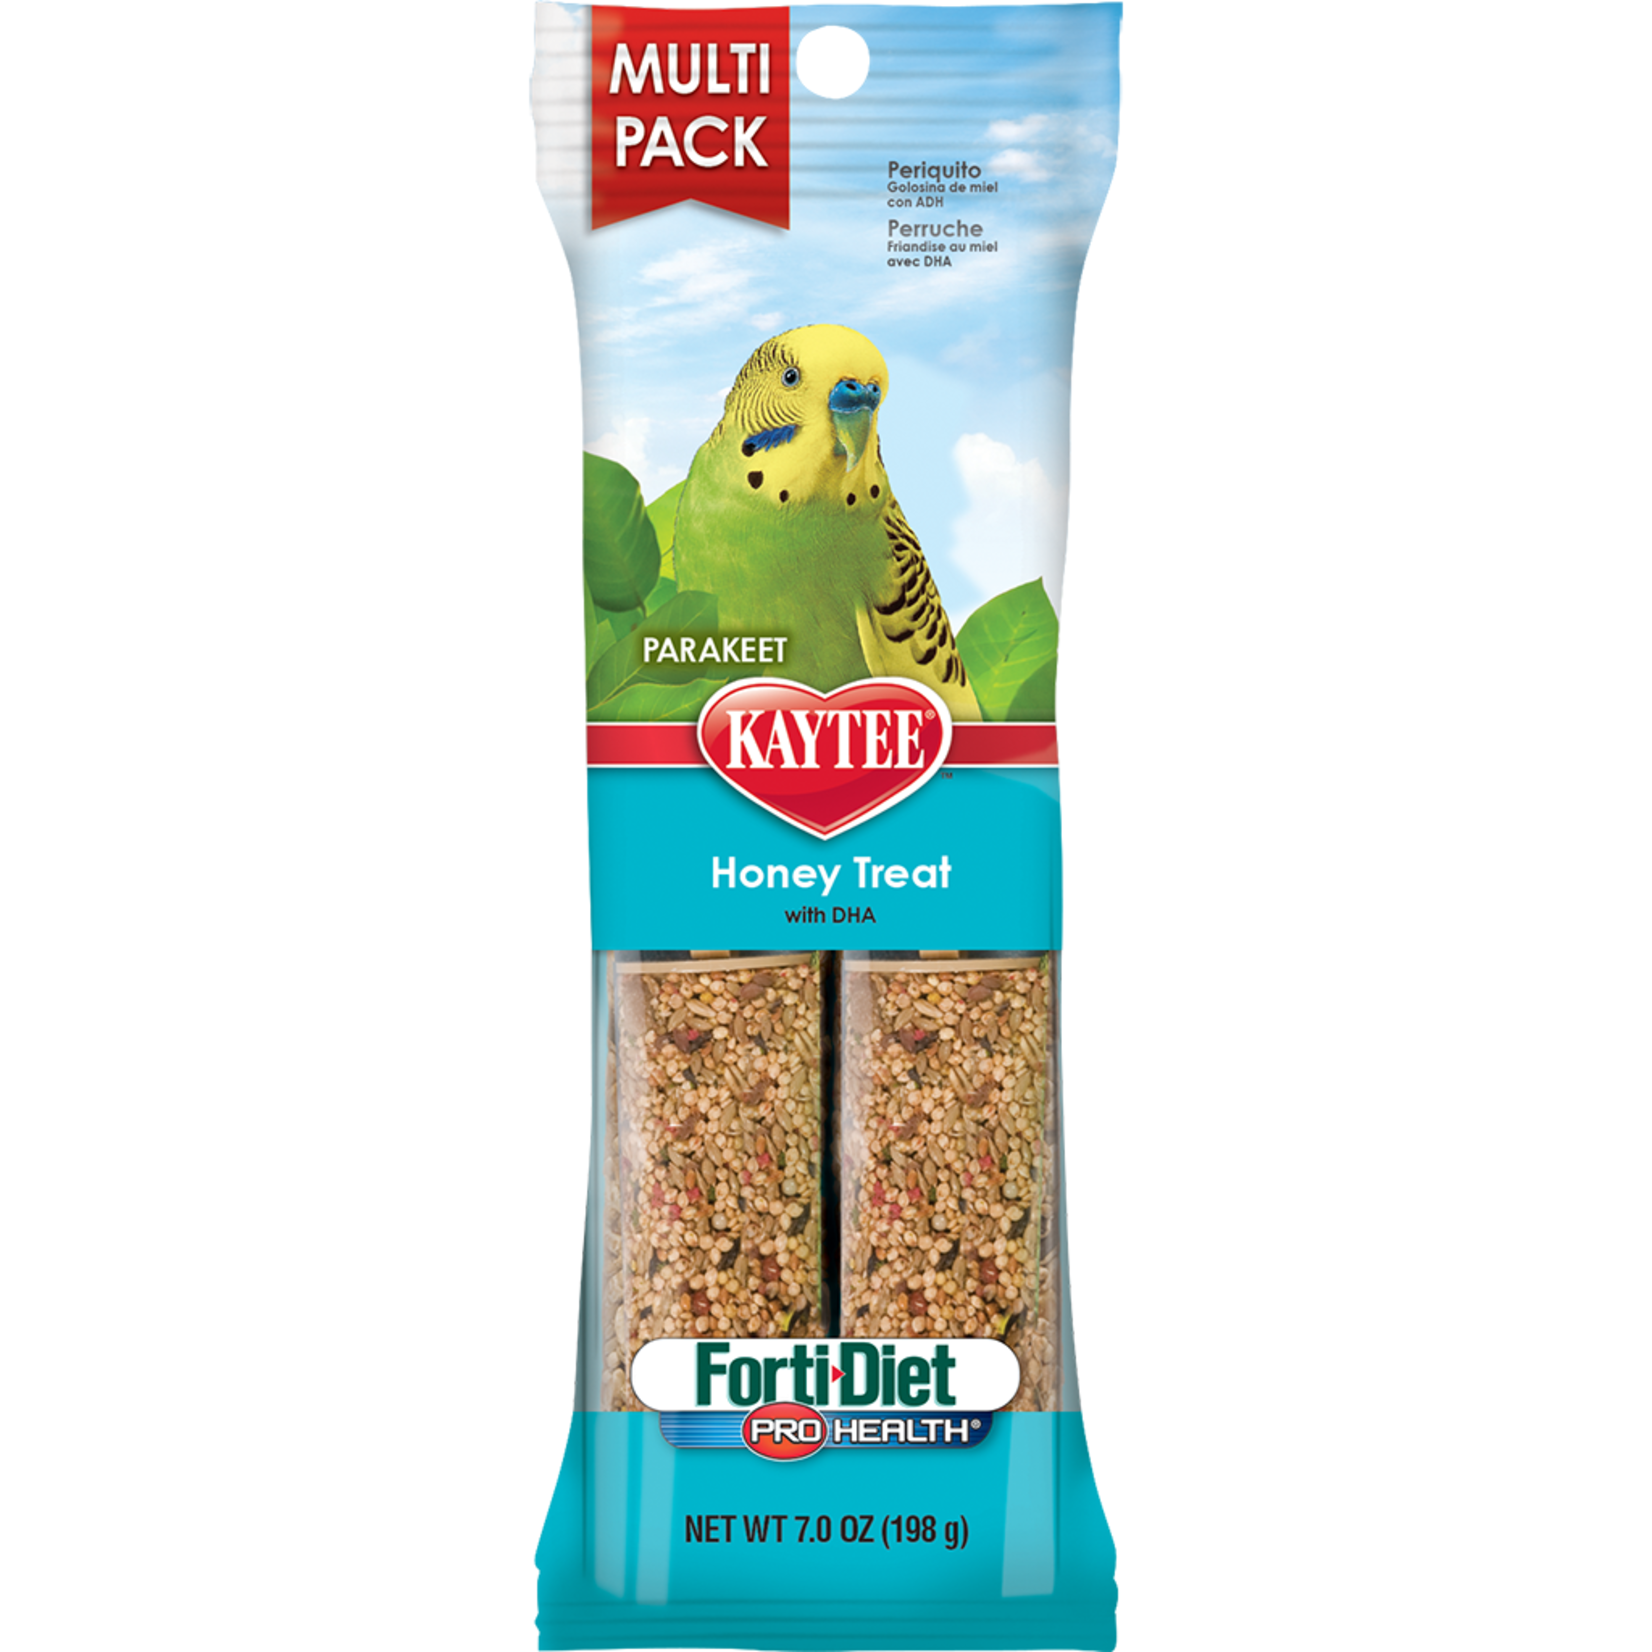 Forti-Diet Pro Health Parakeet HoneyTreat Pack